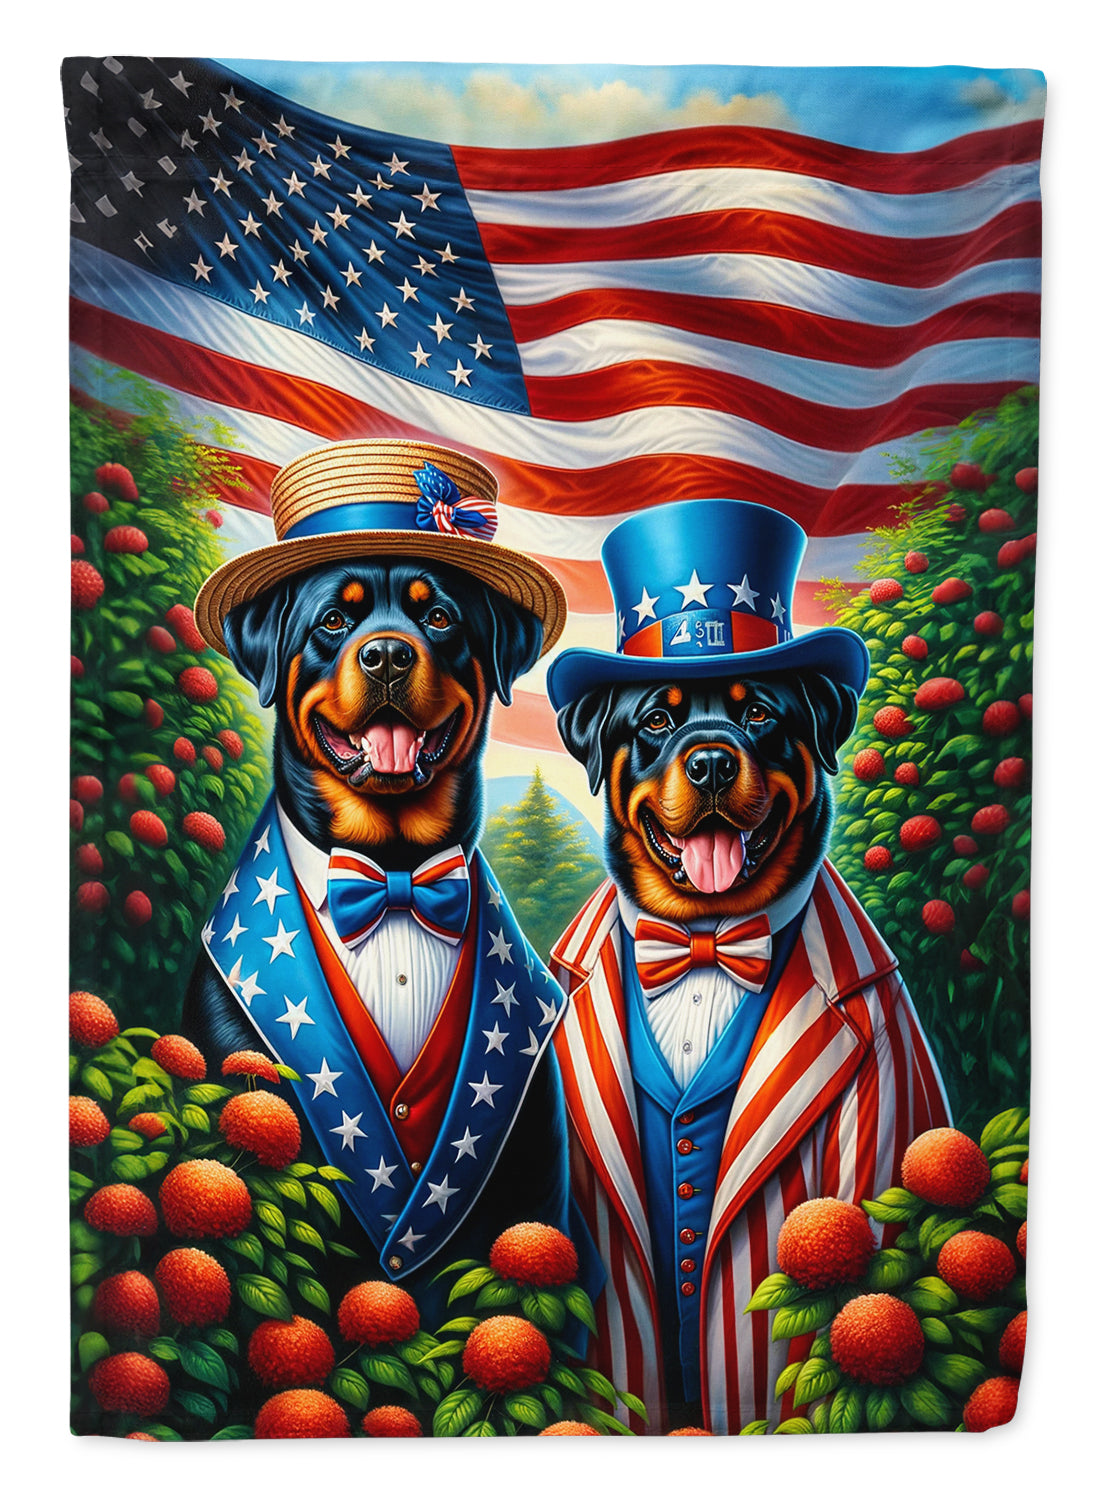 Buy this All American Rottweiler Garden Flag